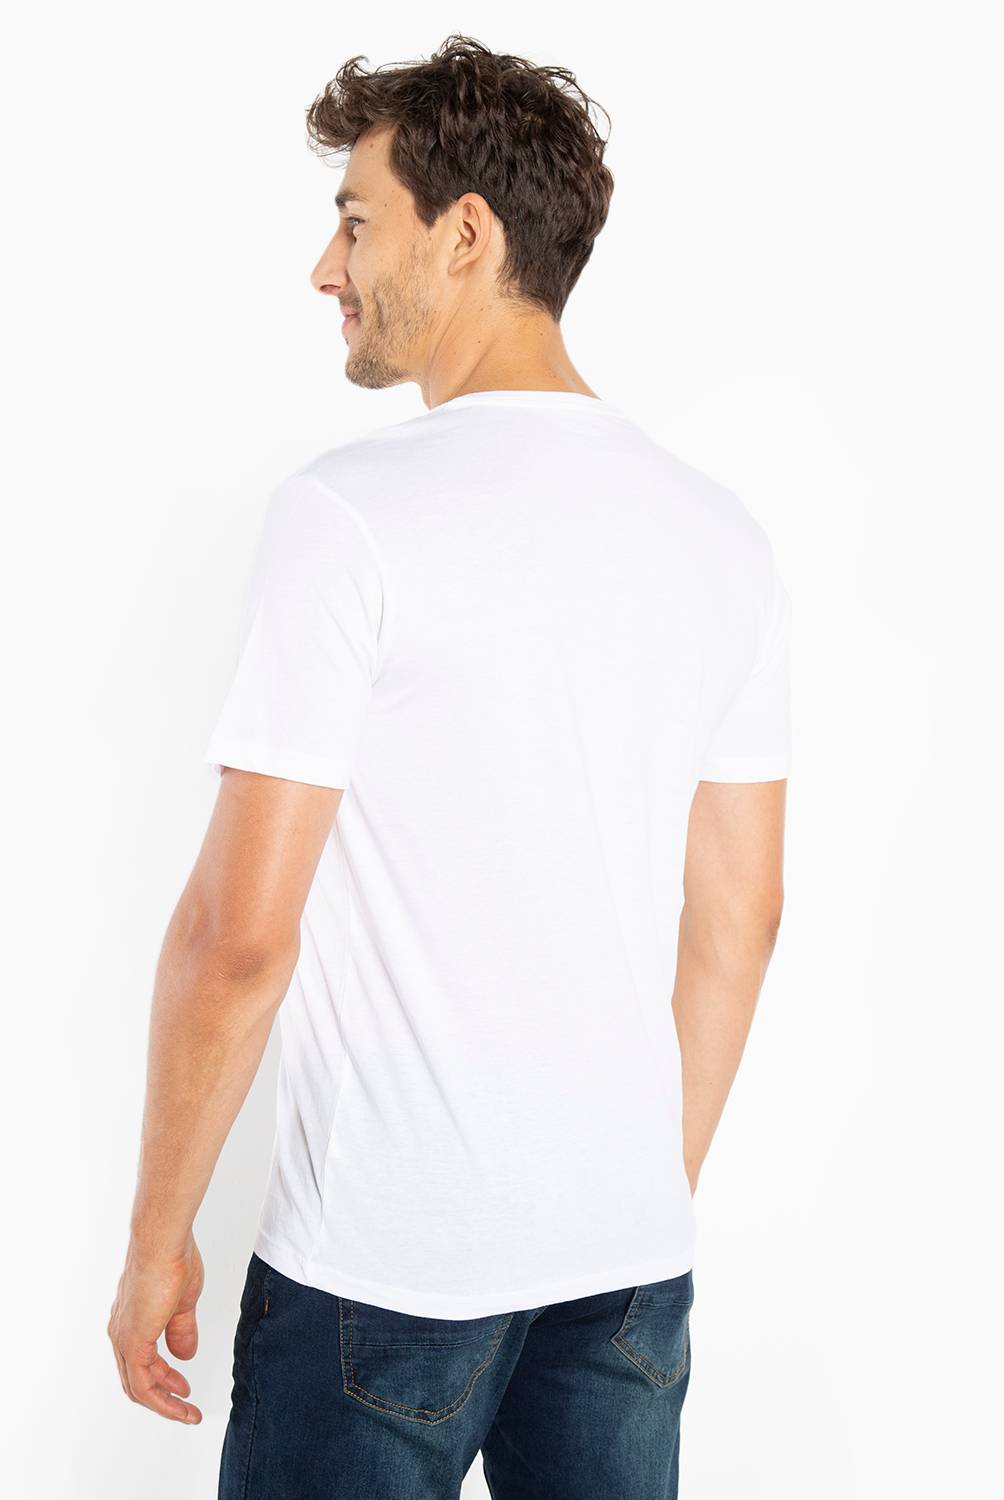 BASEMENT - Basement Camiseta de Algodón Hombre